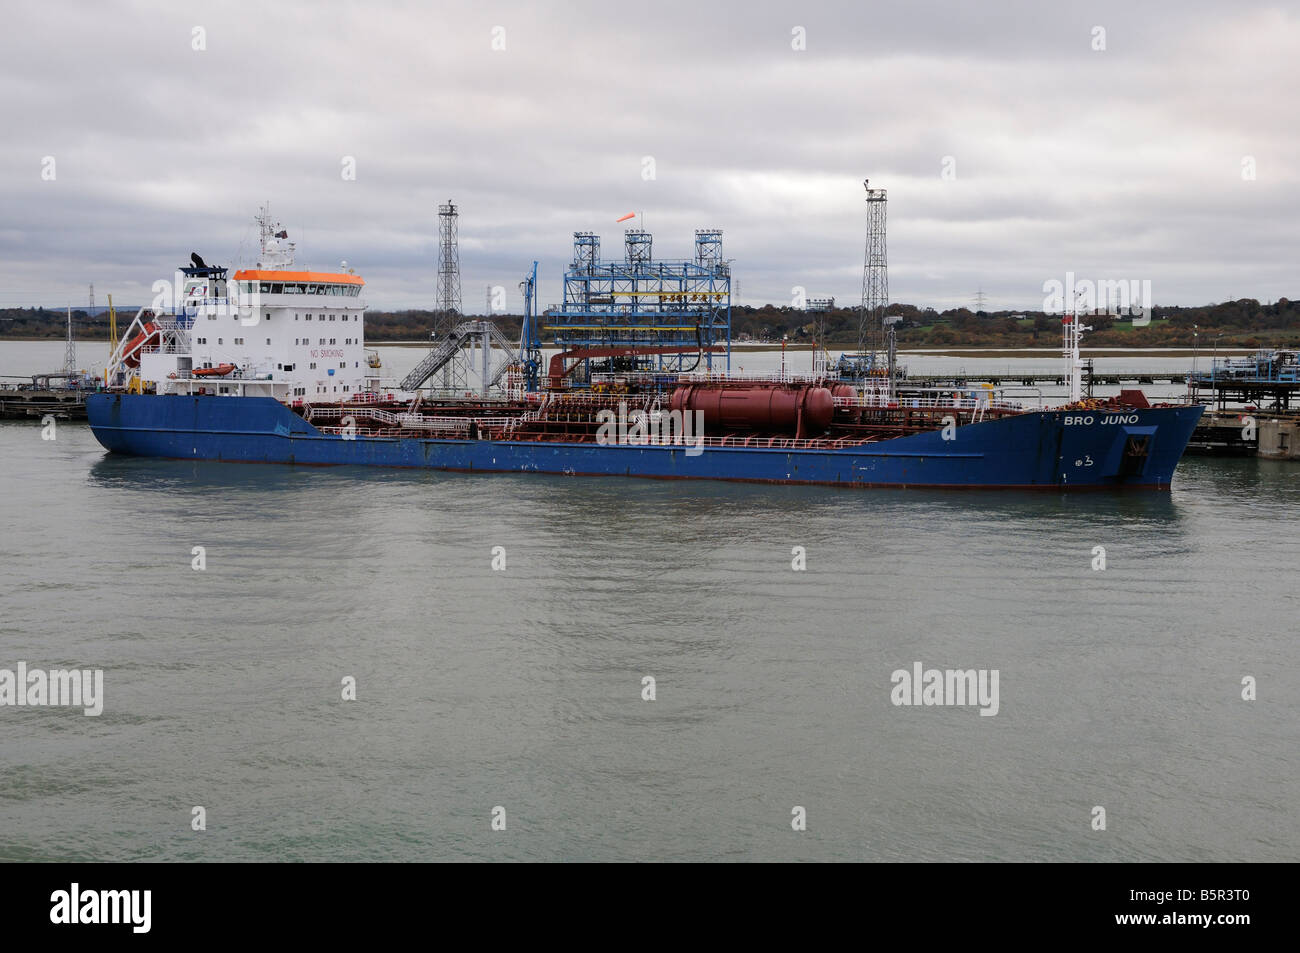 Chemical Tanker Bro Juno berthed in Southampton Water Stock Photo